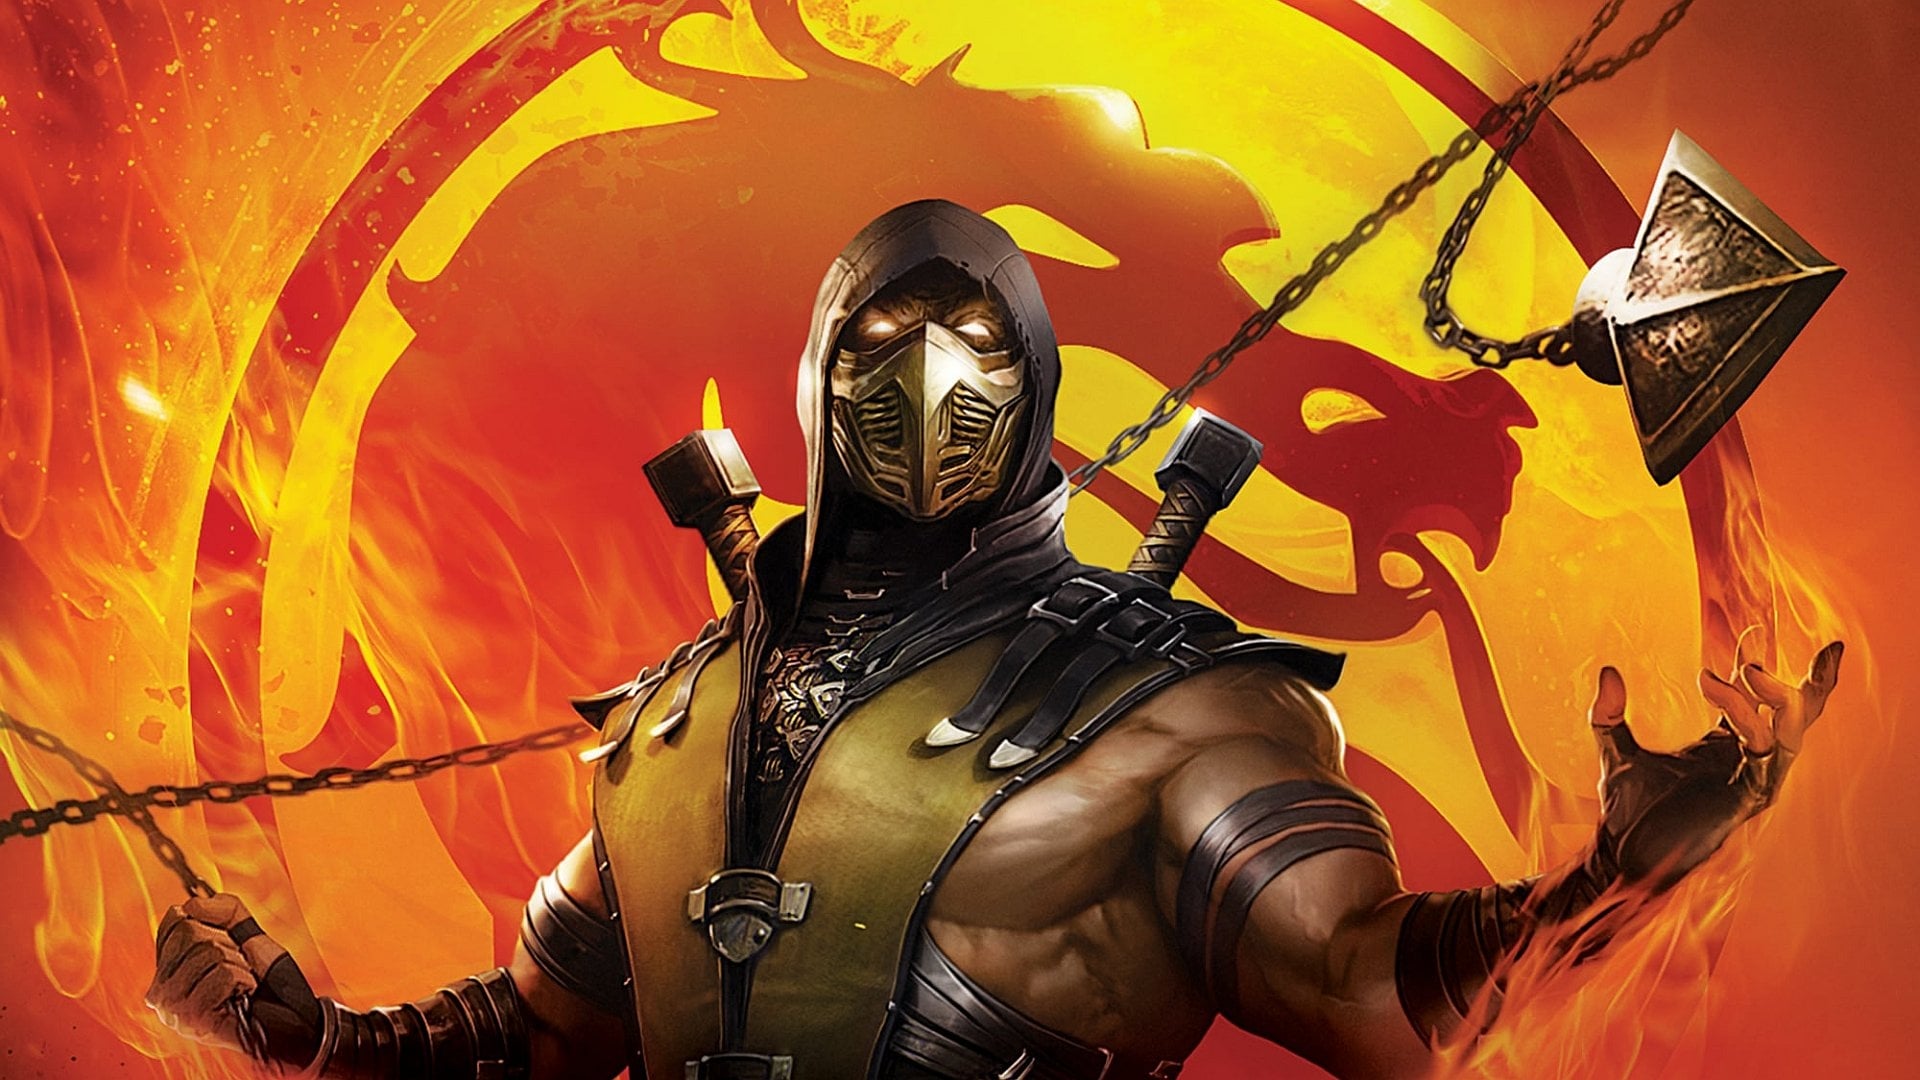 Xem Phim Huyền Thoại Rồng Đen: Scorpion Báo Thù (Mortal Kombat Legends: Scorpion's Revenge)